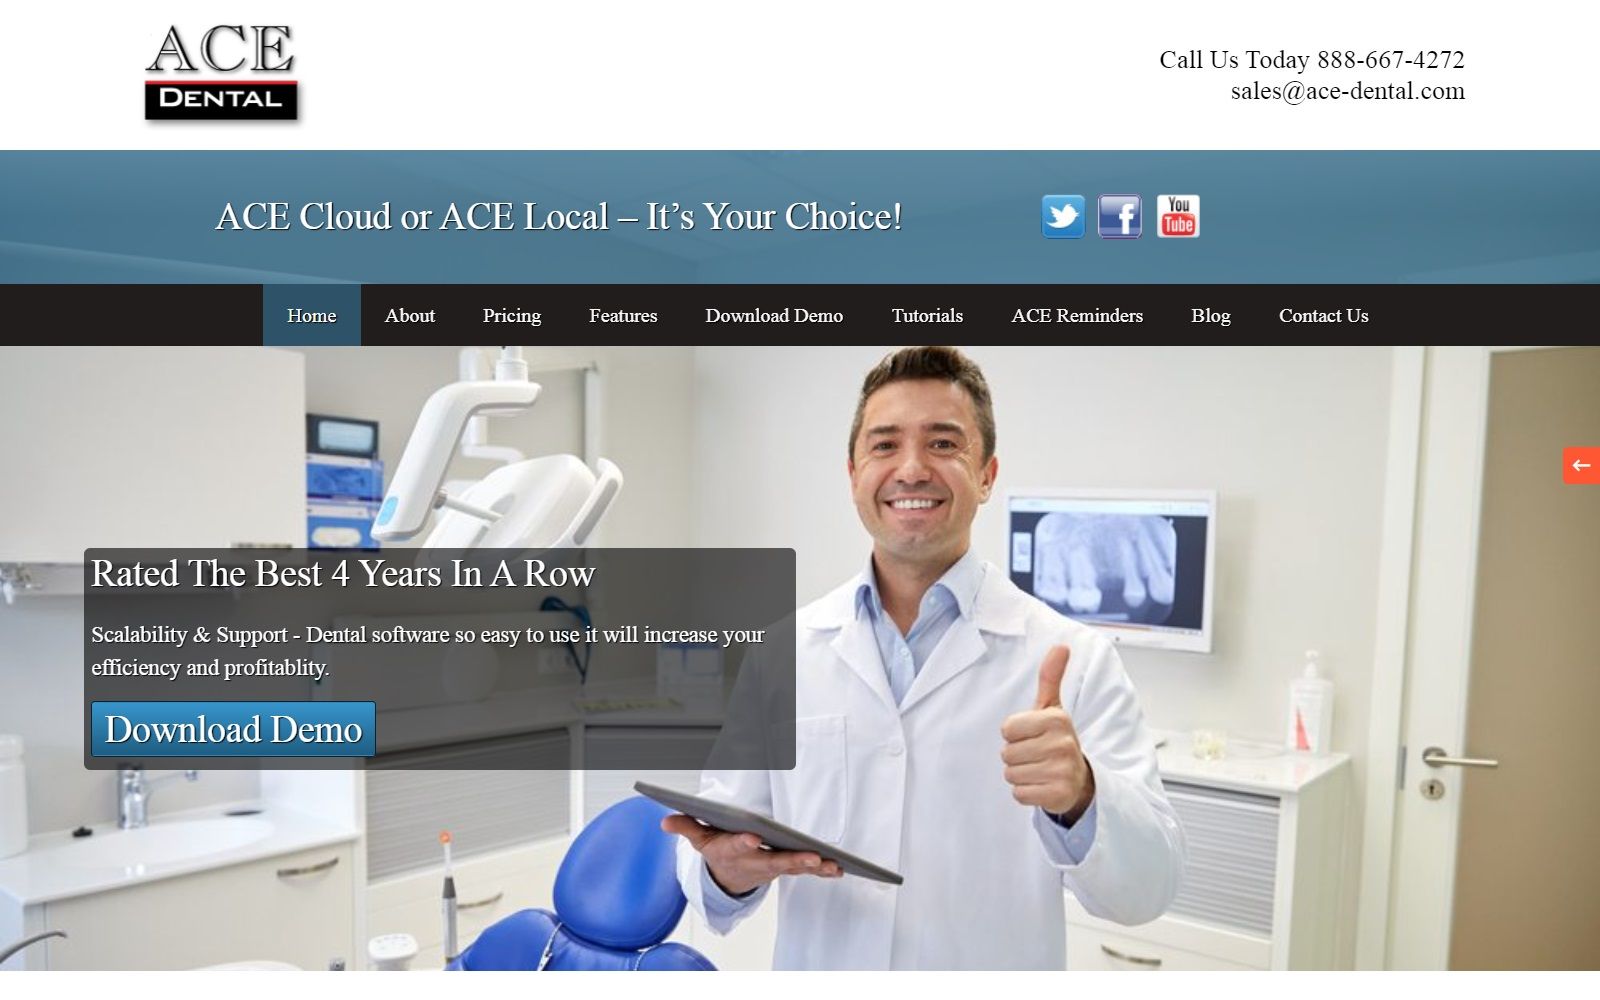 The Screenshot Of Ace Dental Website